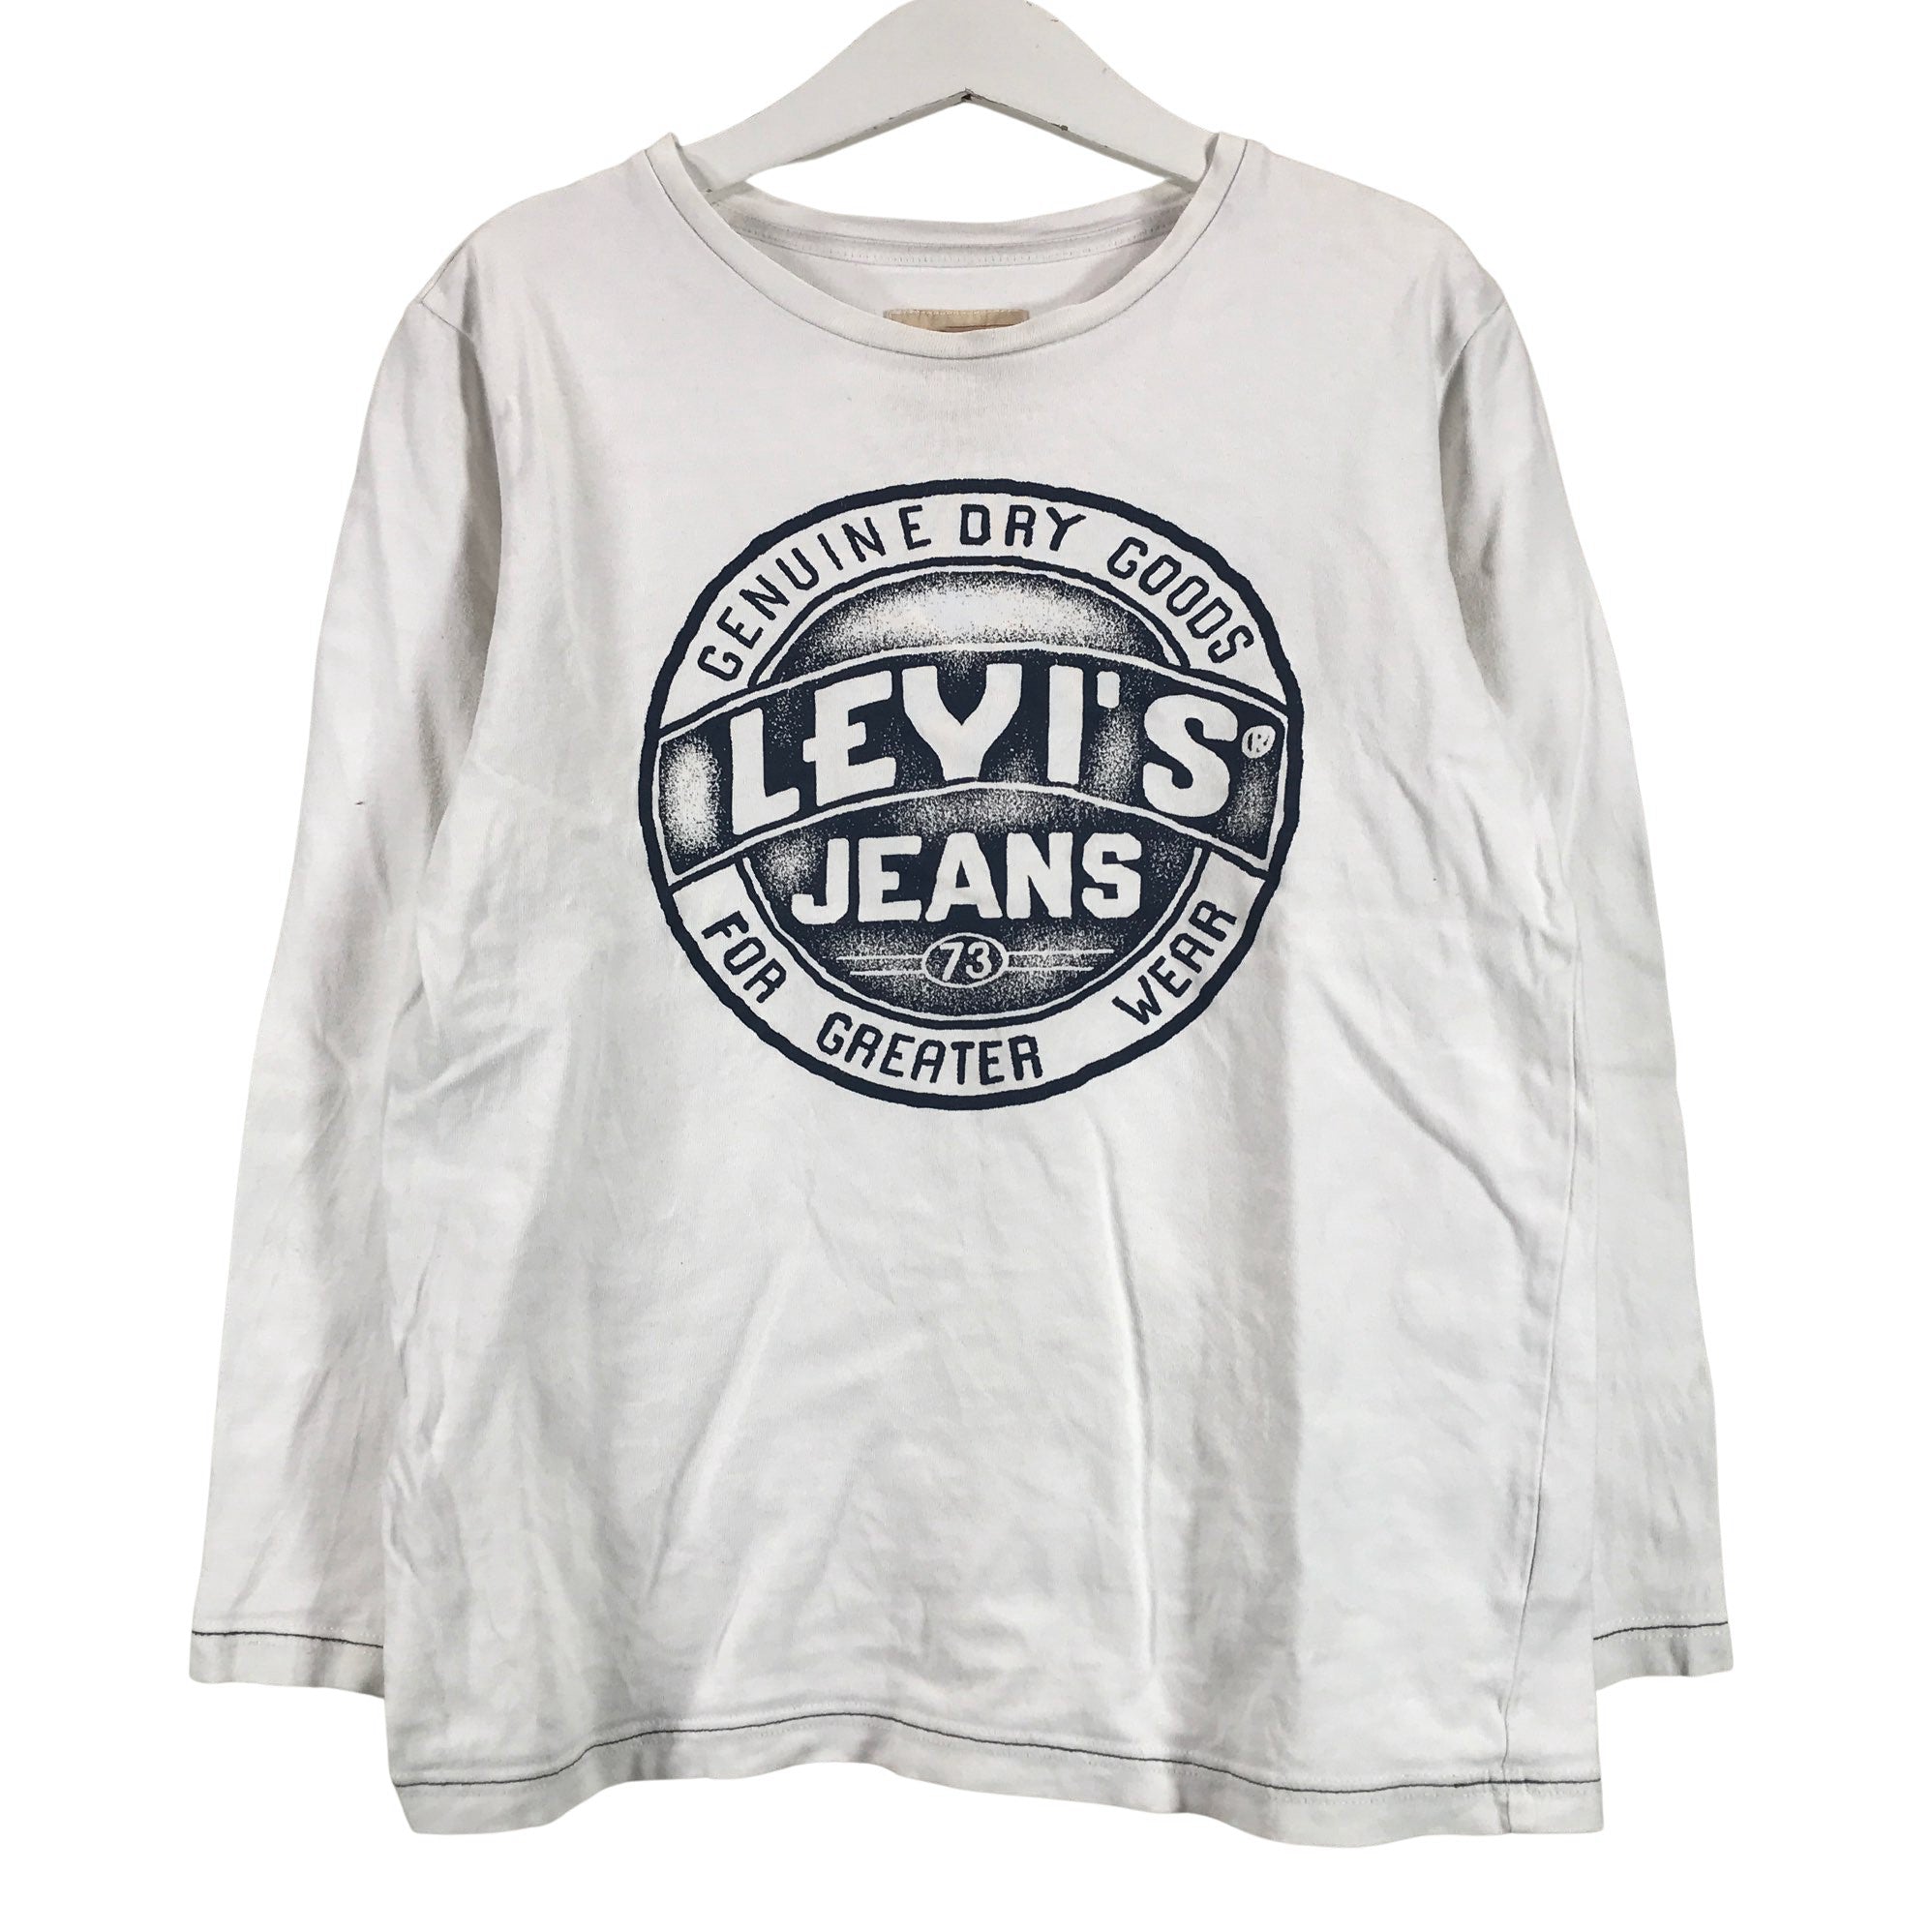 Unisex Levi's Tricot shirt, size 128 - 134 (White) | Emmy